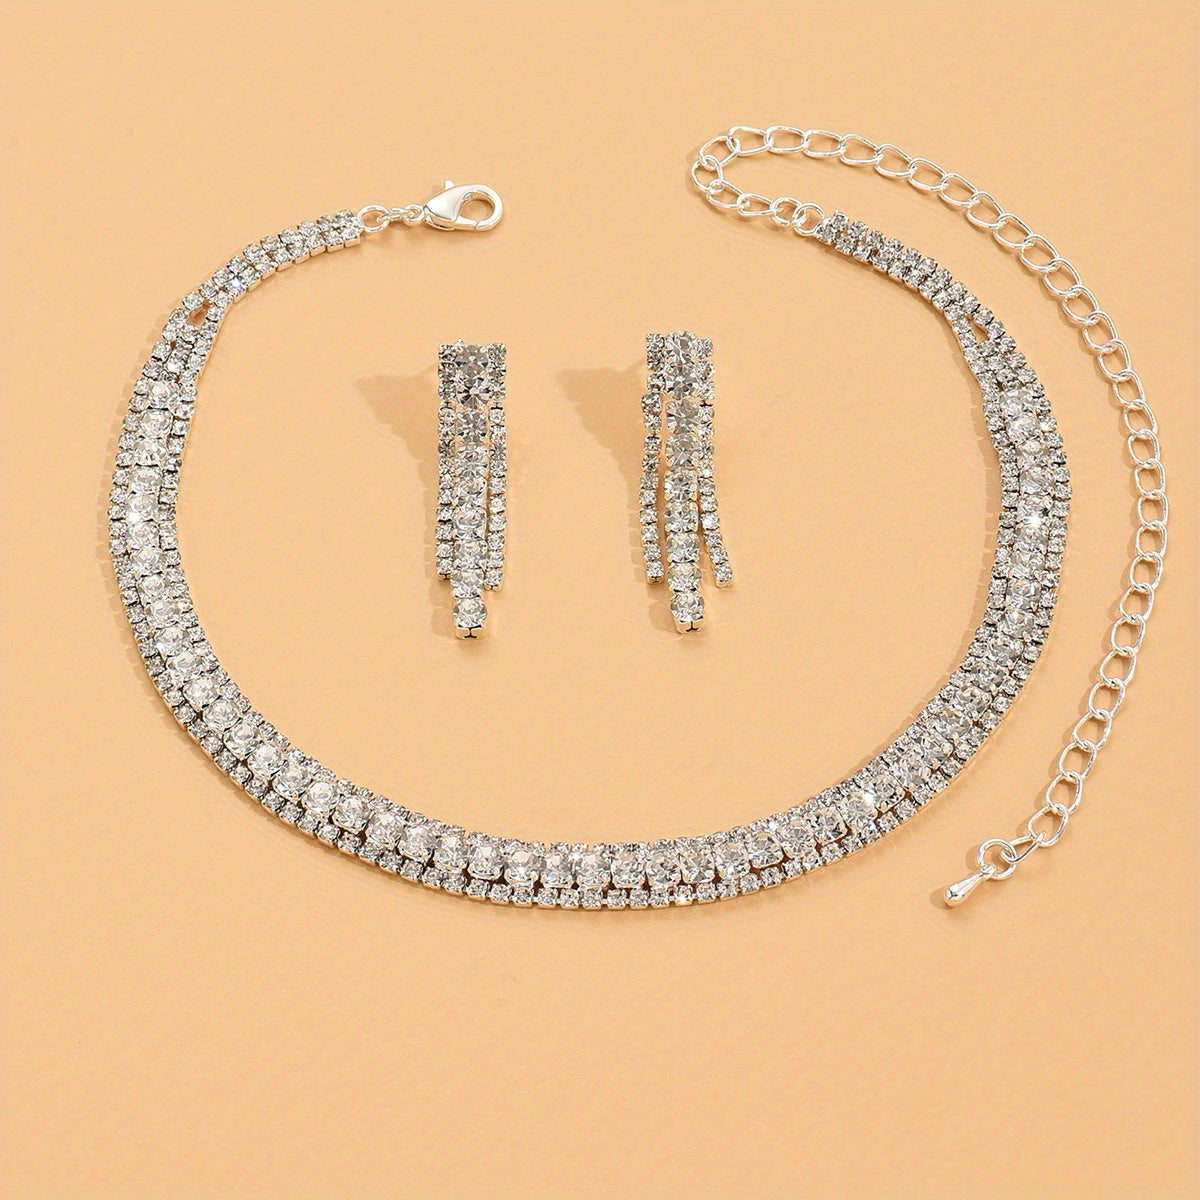 Exquisite Glitter Rhinestone Choker and Tassel Earrings Set - Retro Luxury Design, Silver Plated Fine Jewelry Gift